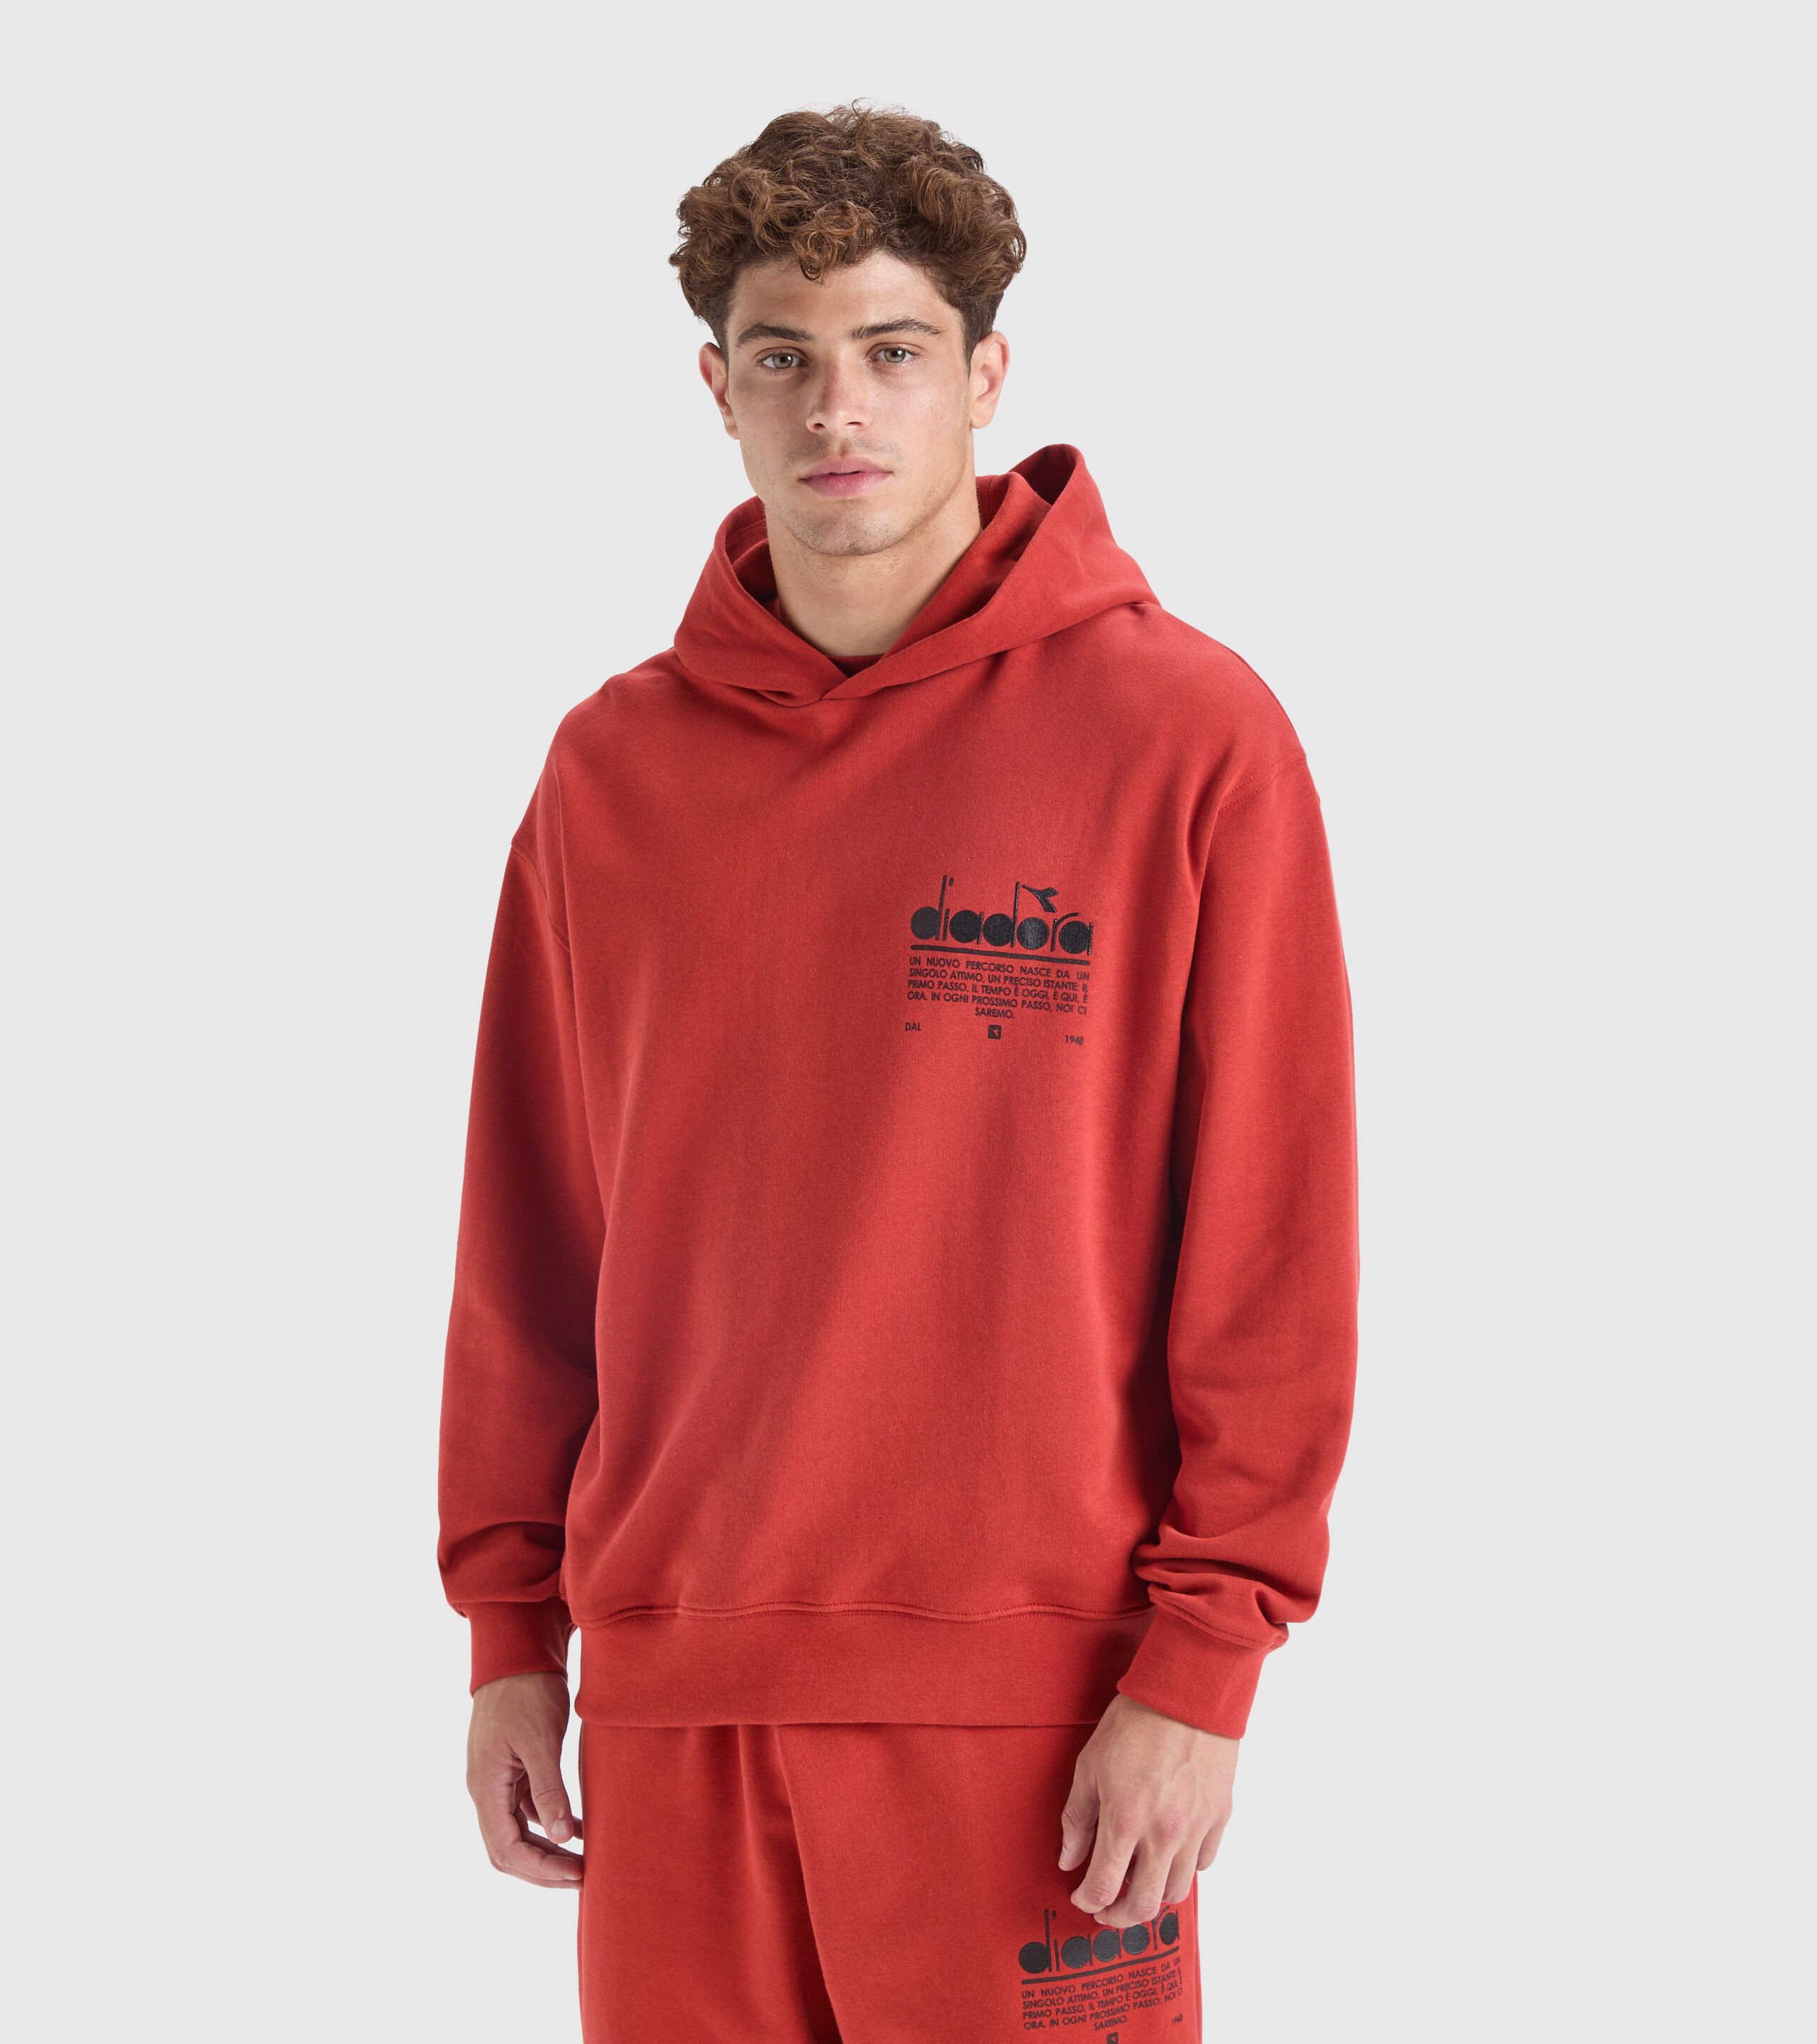 HOODIE MANIFESTO Cotton hooded sweatshirt - Unisex - Diadora